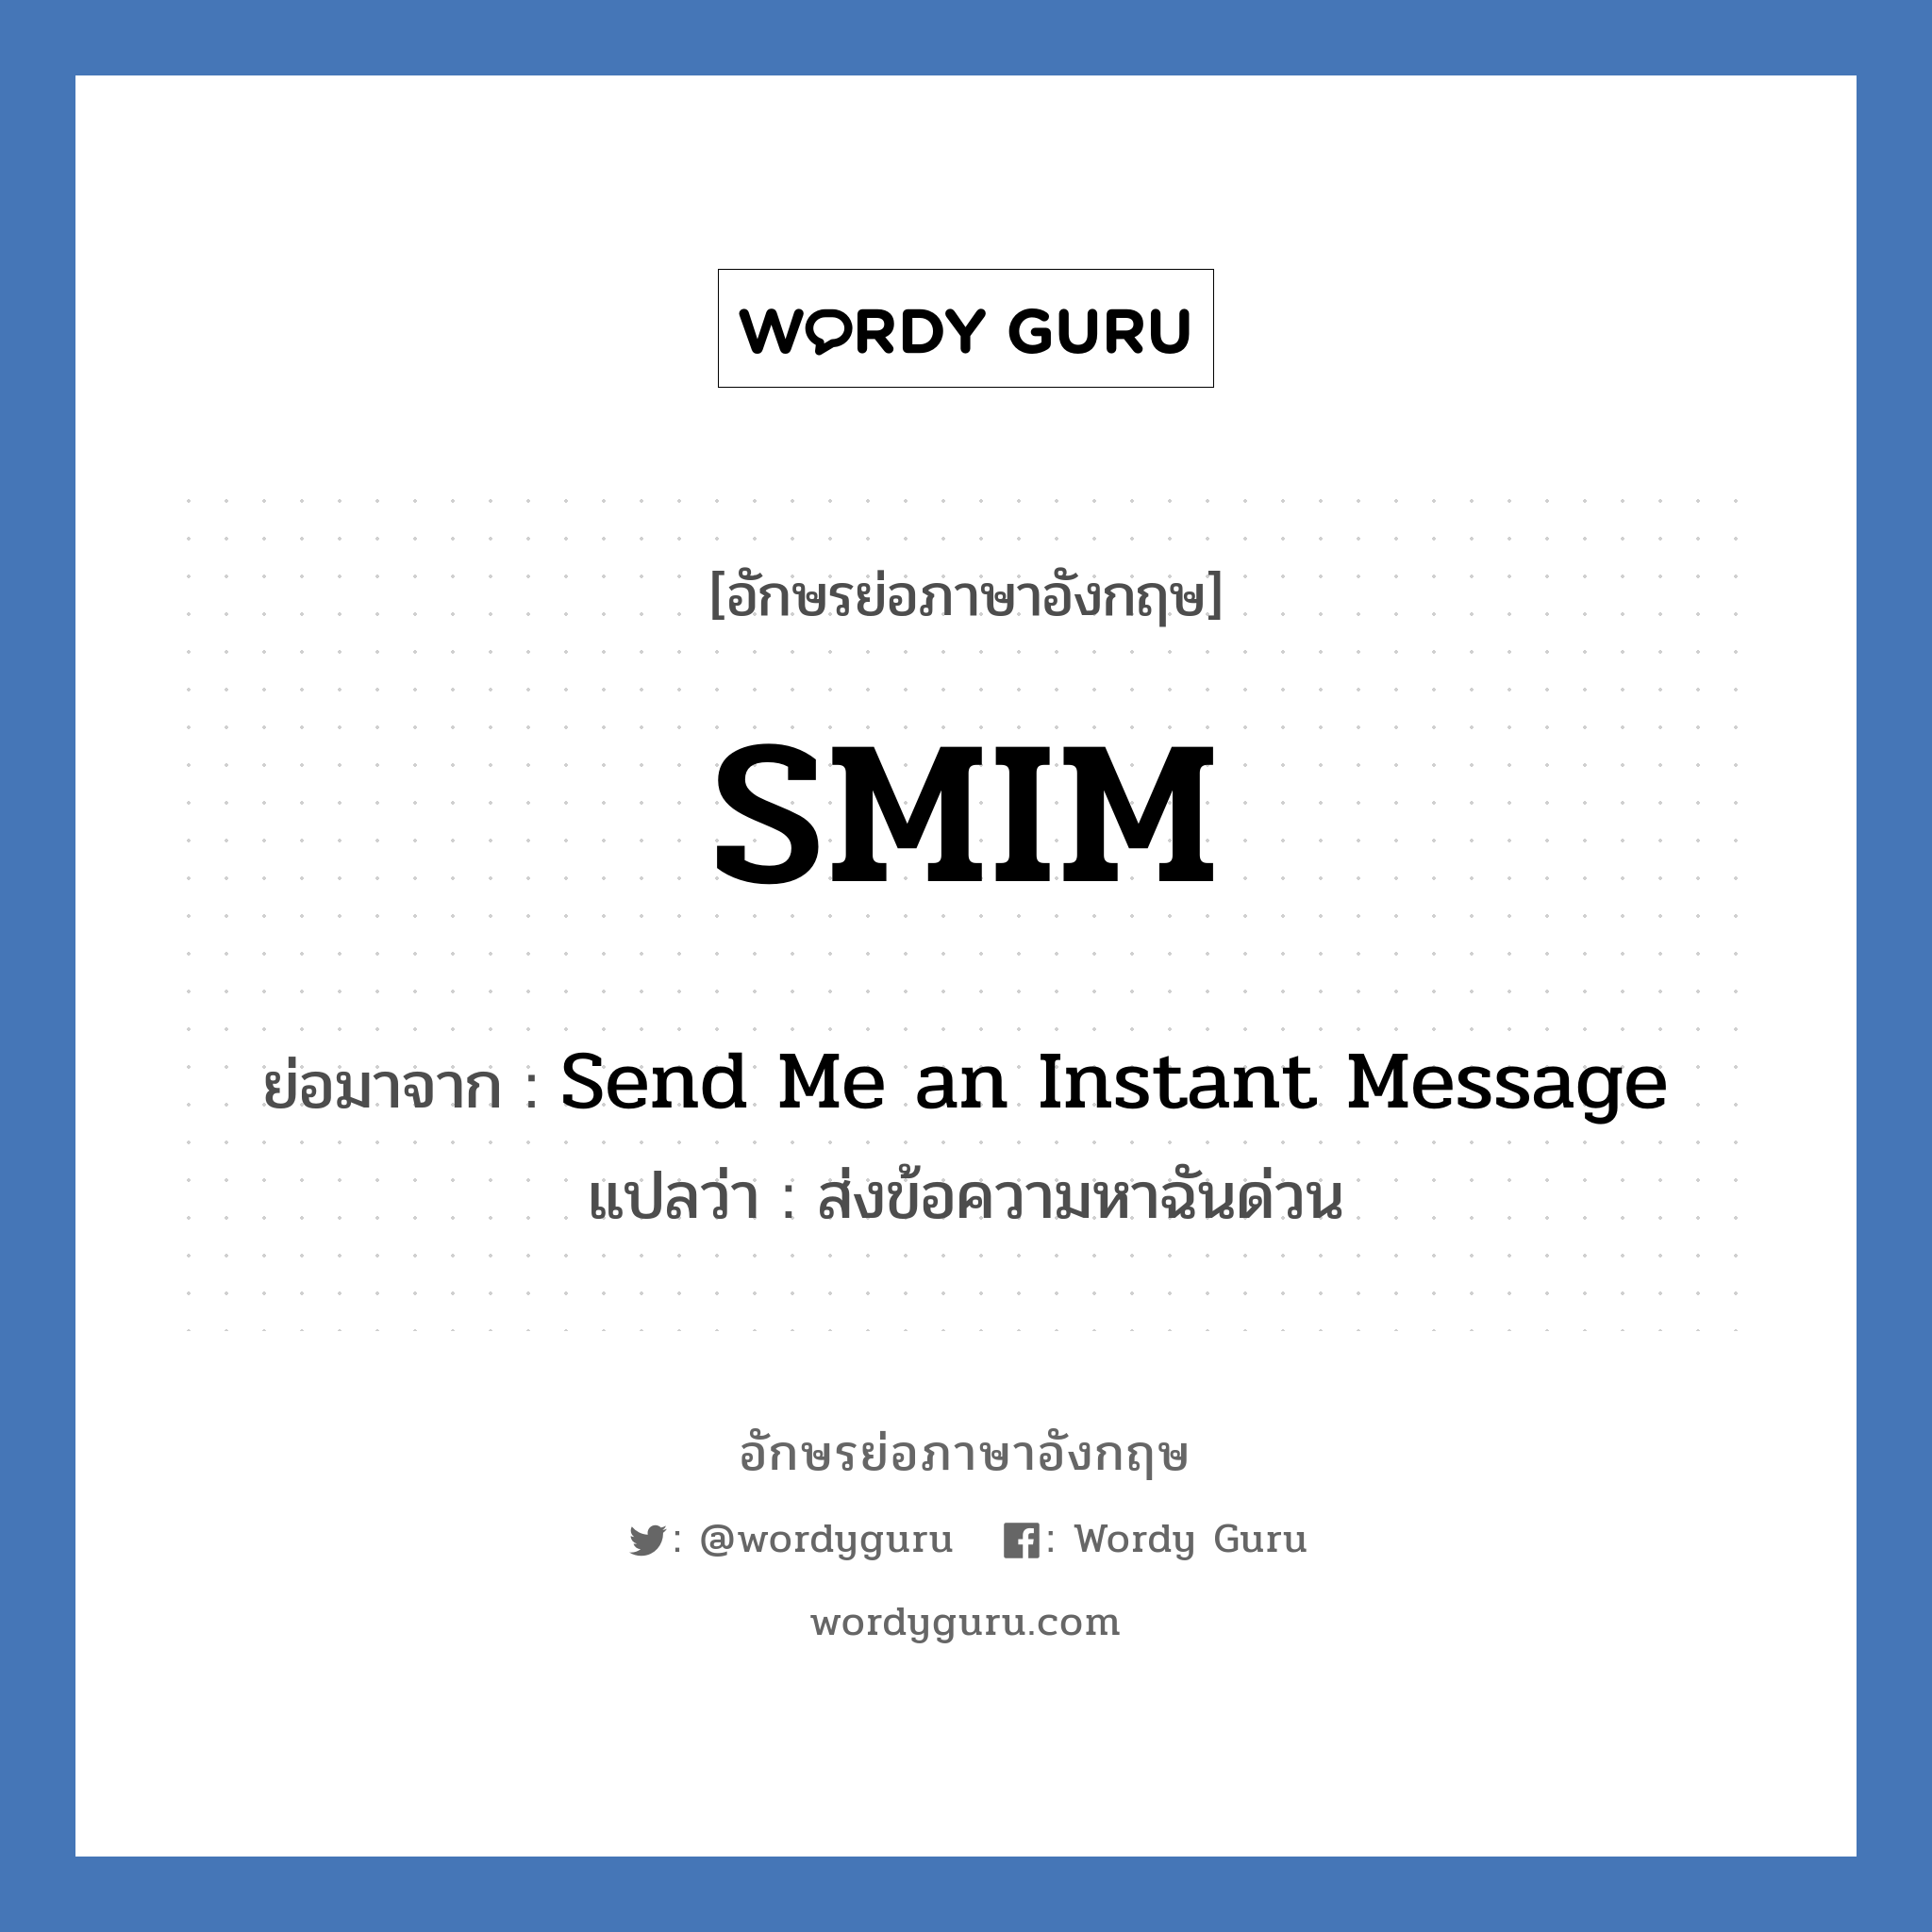 Send Me an Instant Message คำย่อคือ? แปลว่า?, อักษรย่อภาษาอังกฤษ Send Me an Instant Message ย่อมาจาก SMIM แปลว่า ส่งข้อความหาฉันด่วน